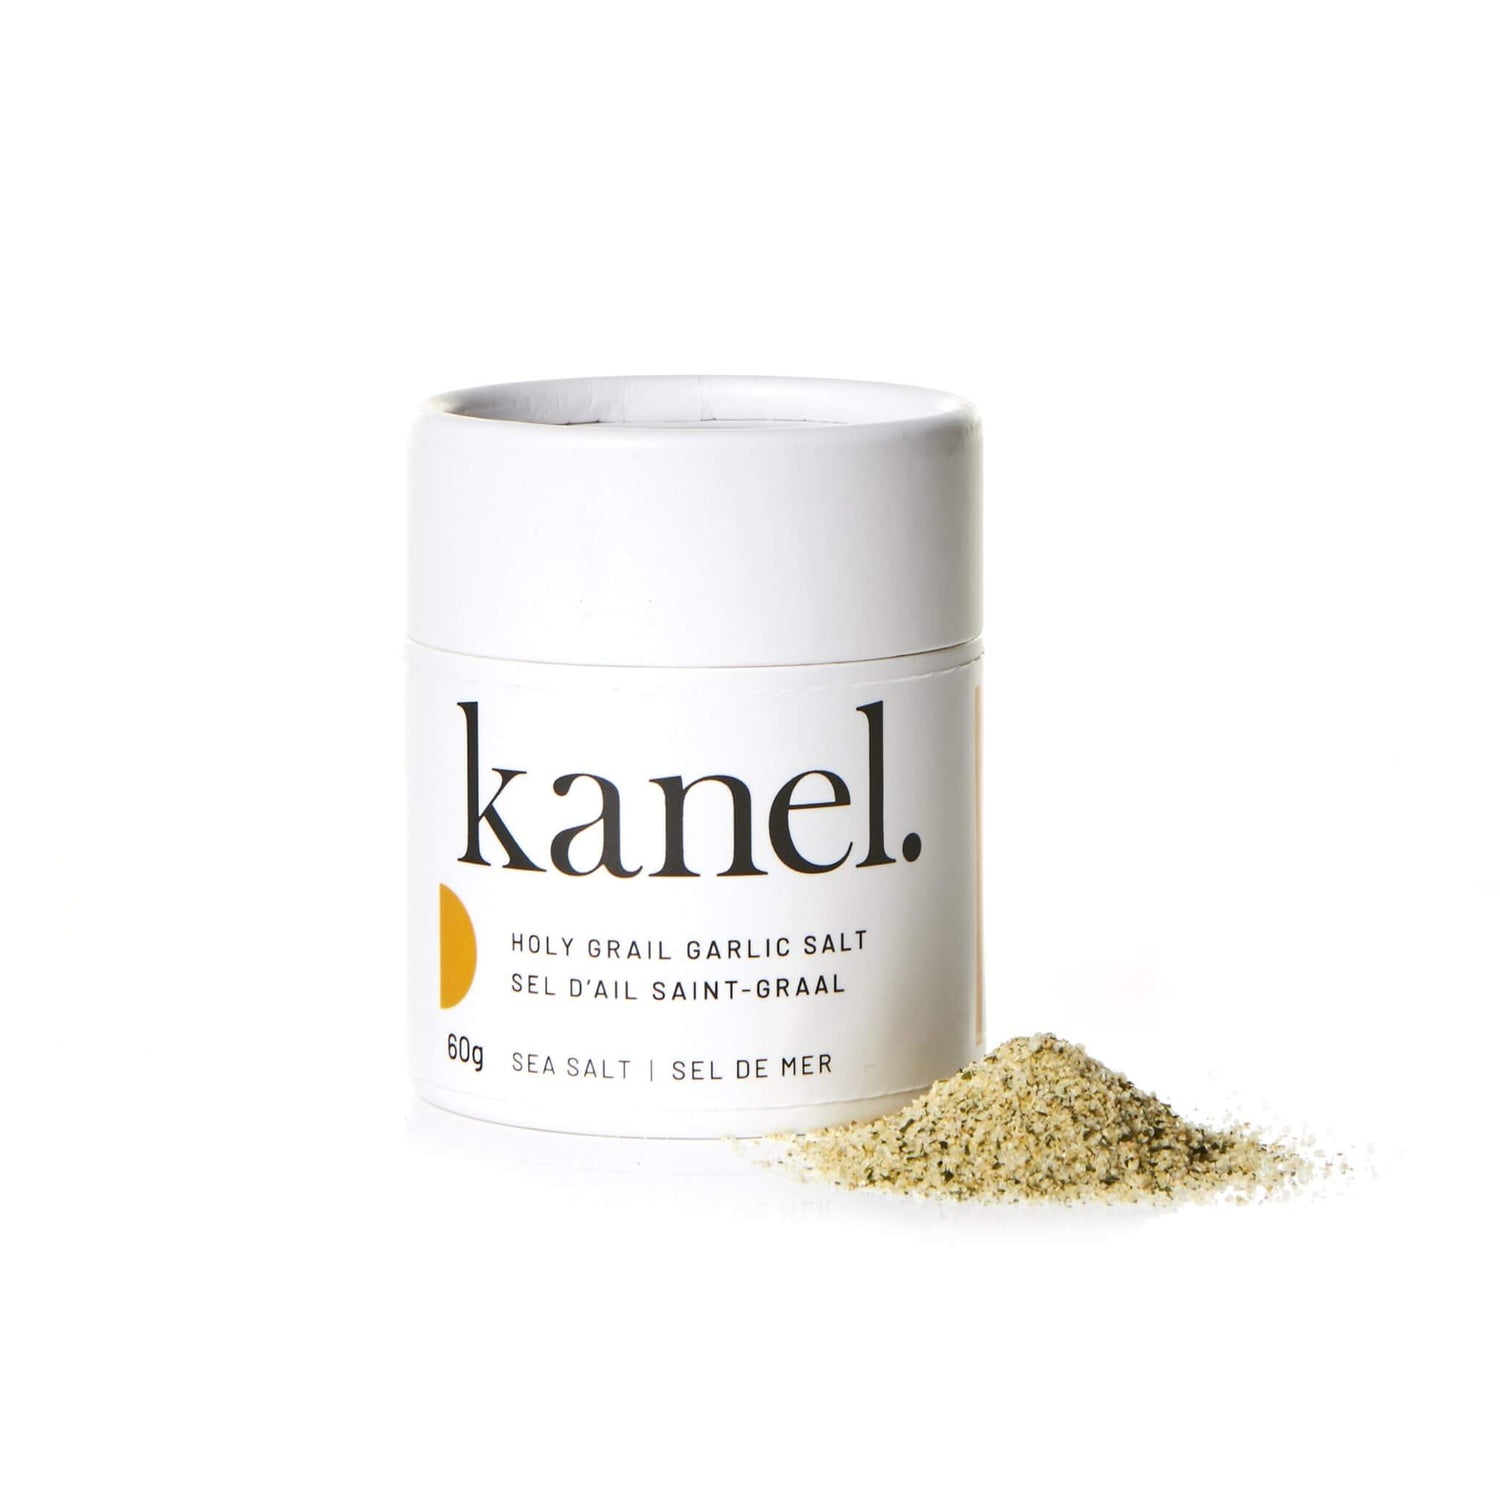 Holy Grail Garlic Salt by Kanel